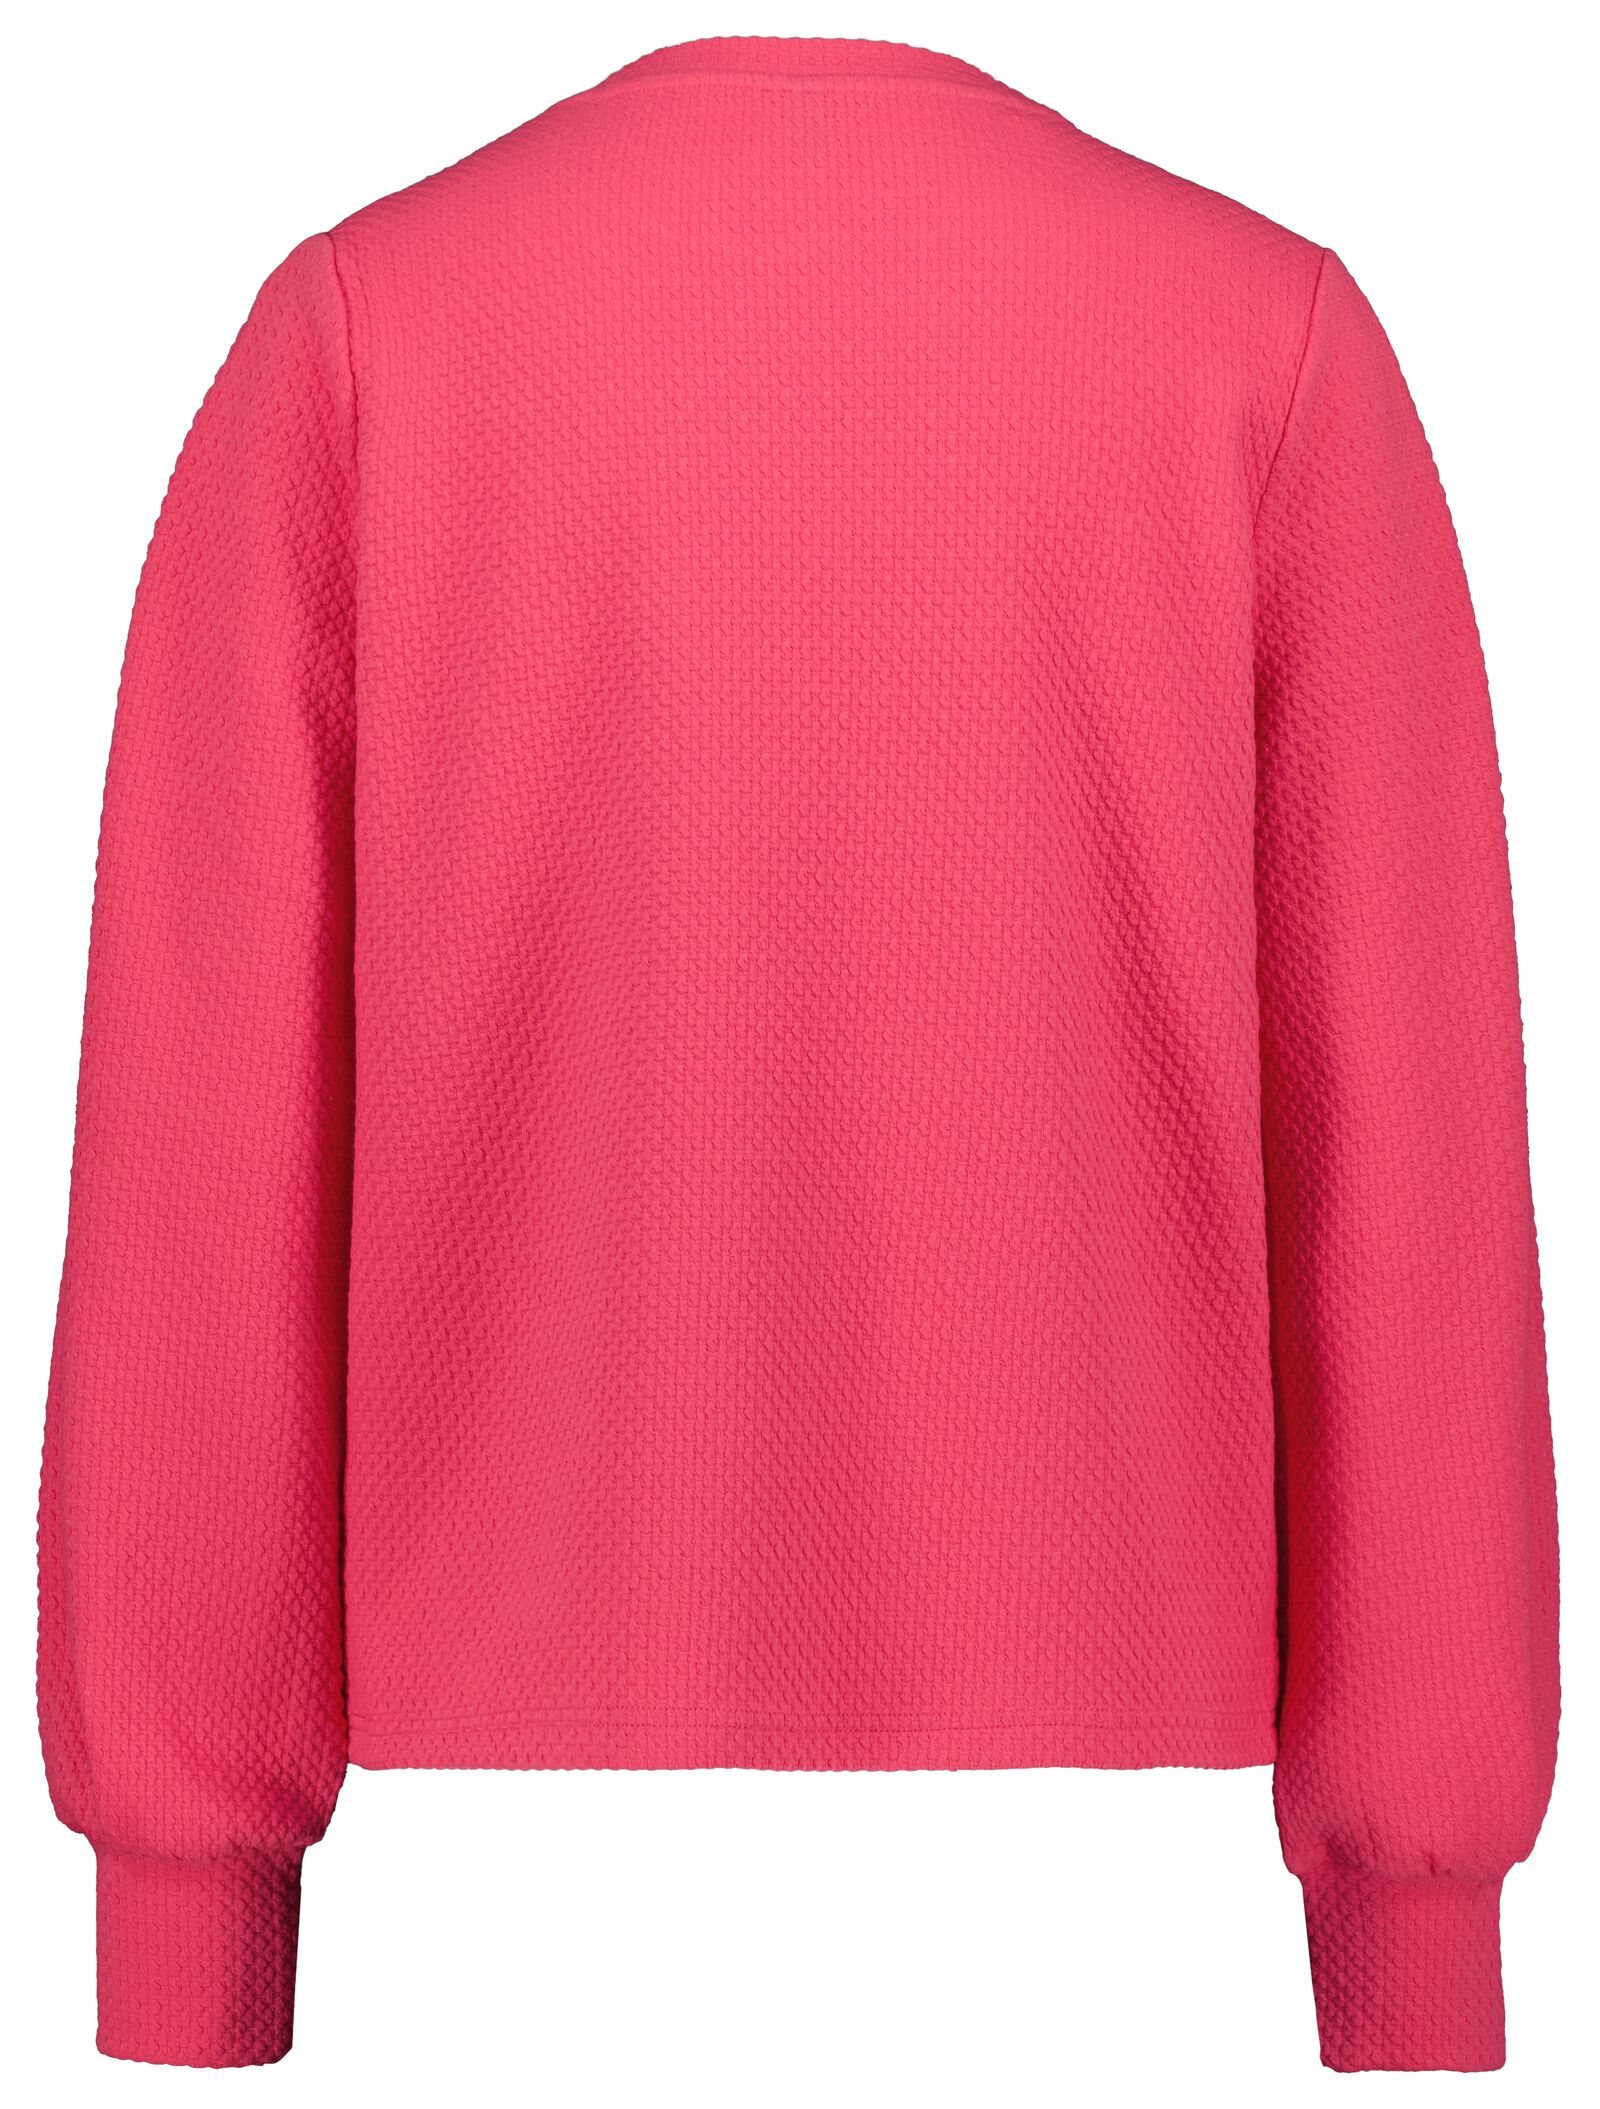 dames sweater Cherry roze - 1000029488 - HEMA